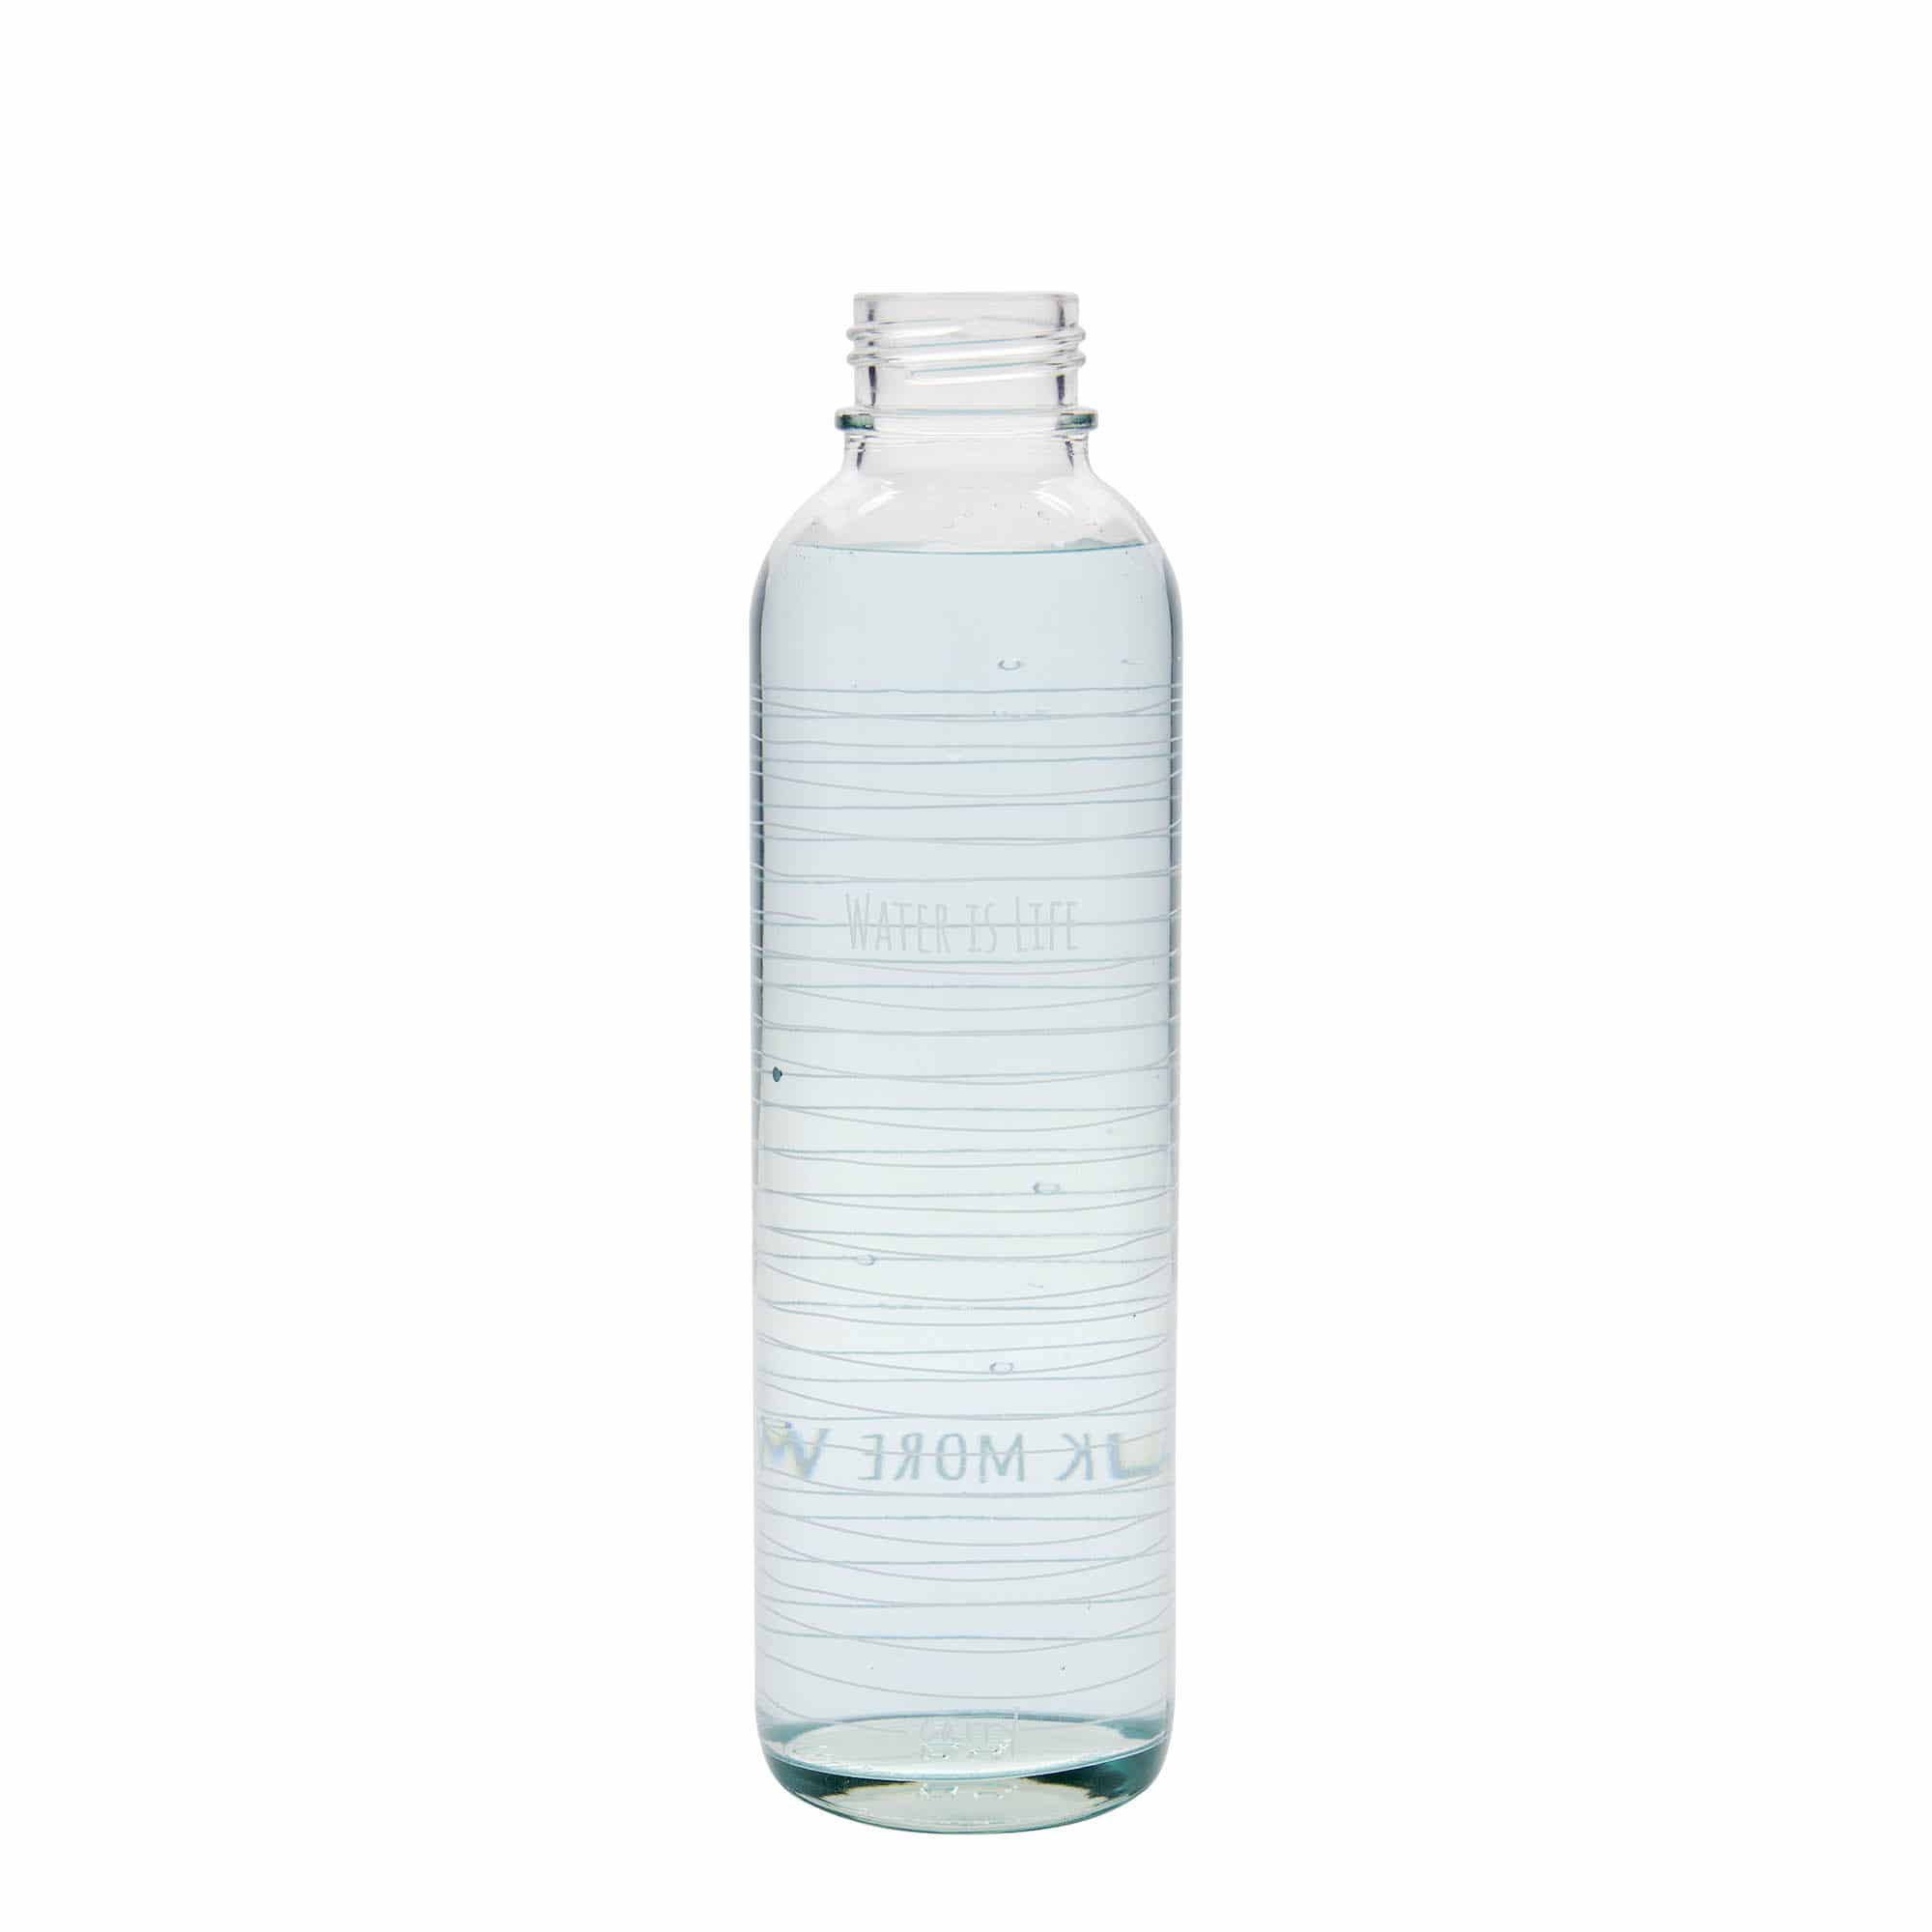 700 ml dricksflaska CARRY Bottle, motiv: Water is Life, mynning: skruvkapsel